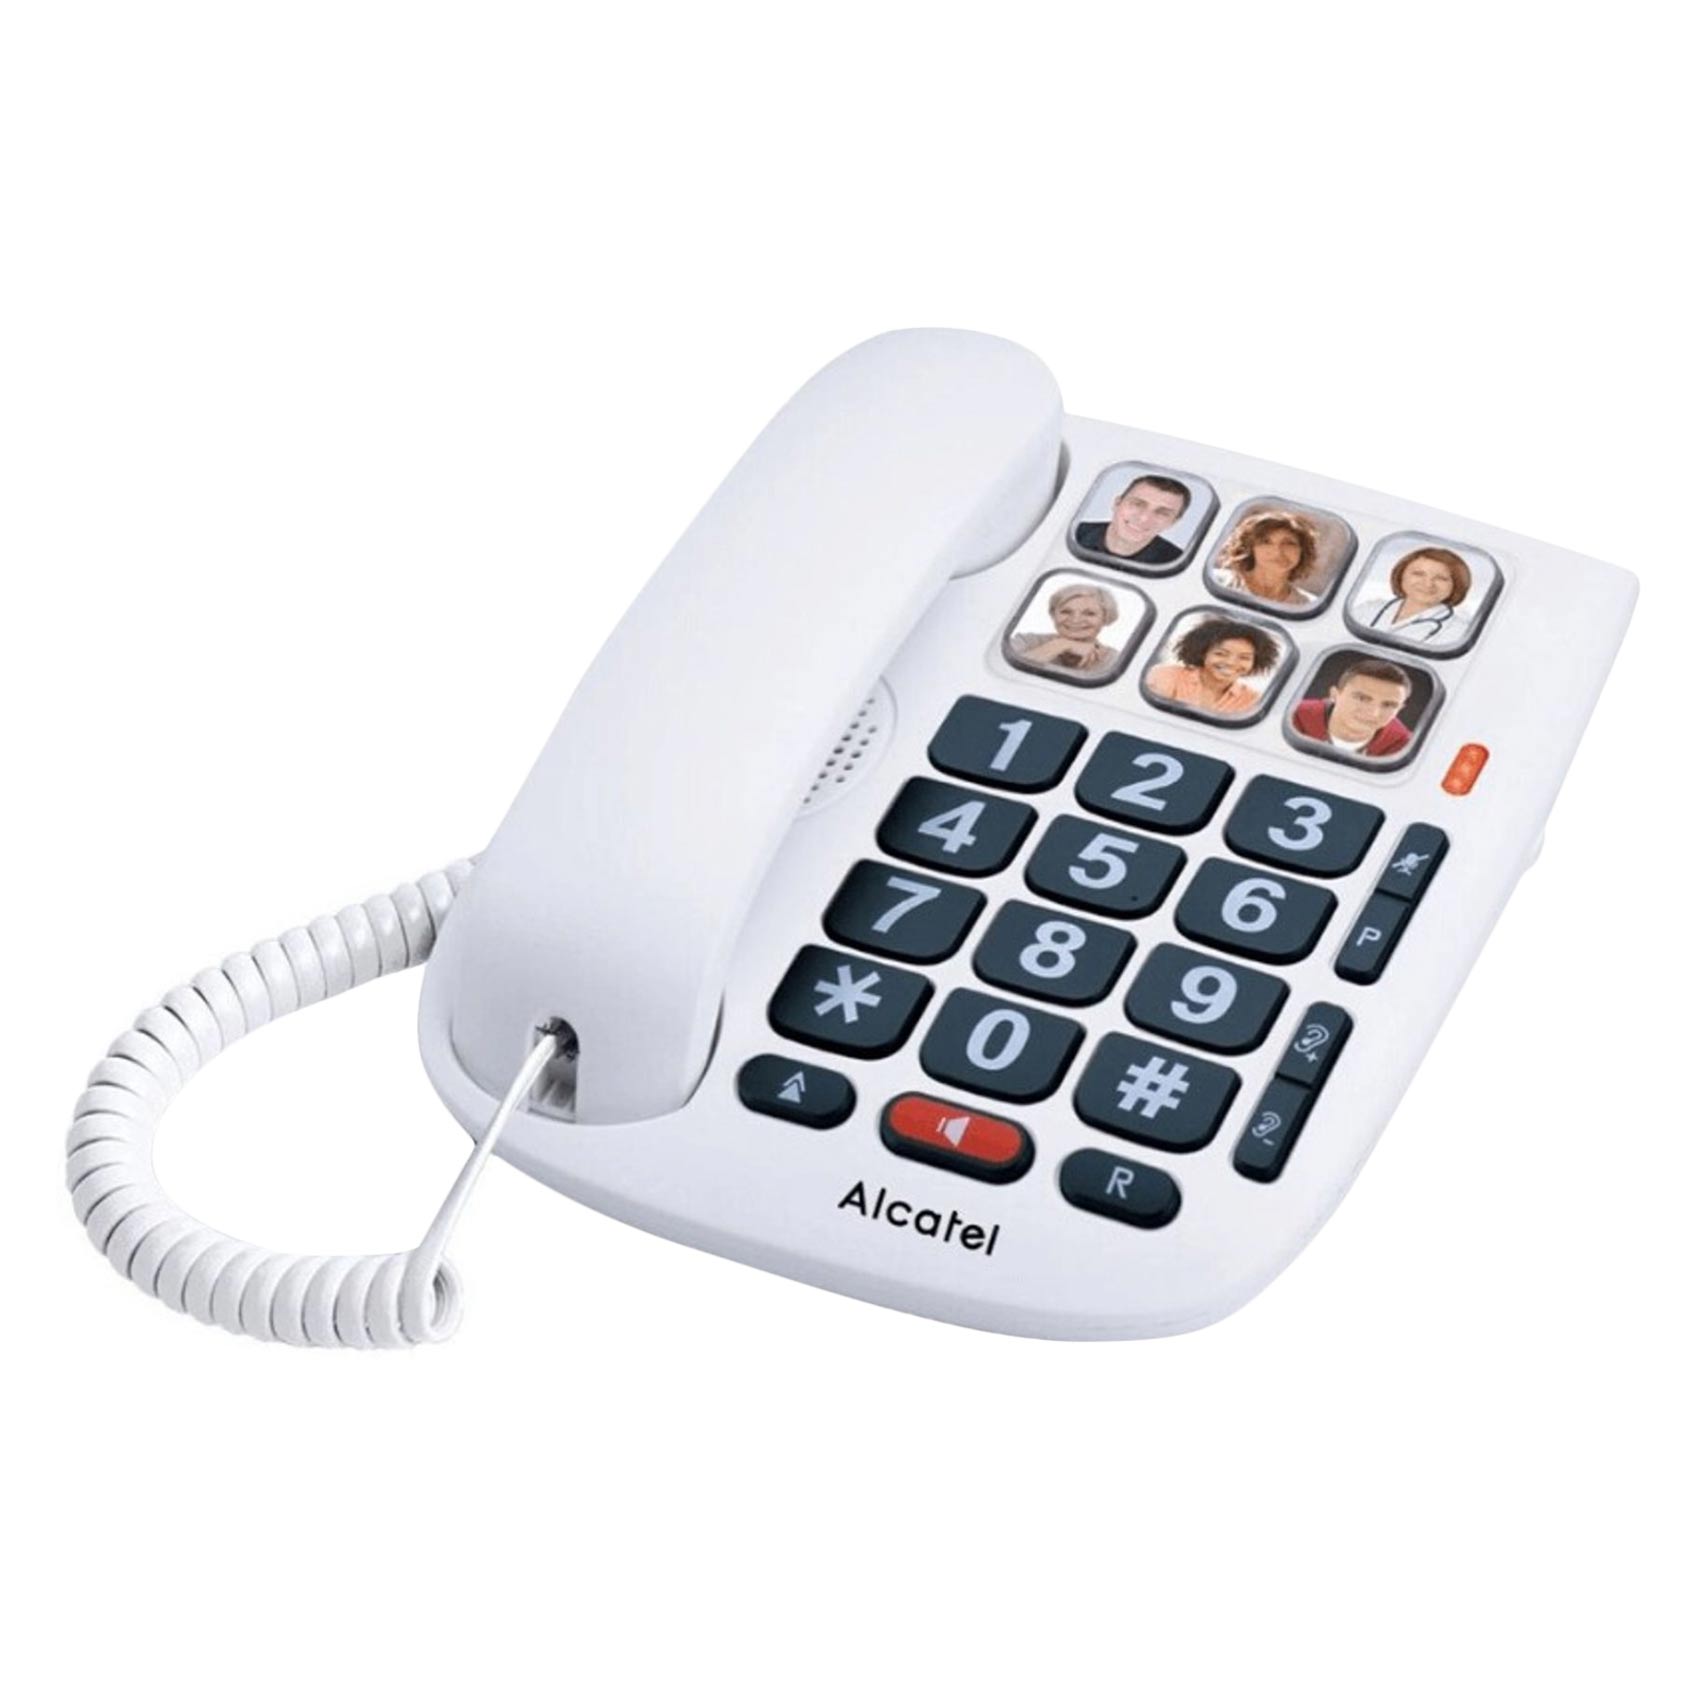 Alcatel TMAX10 Big Bottom Corded Landline Phone White